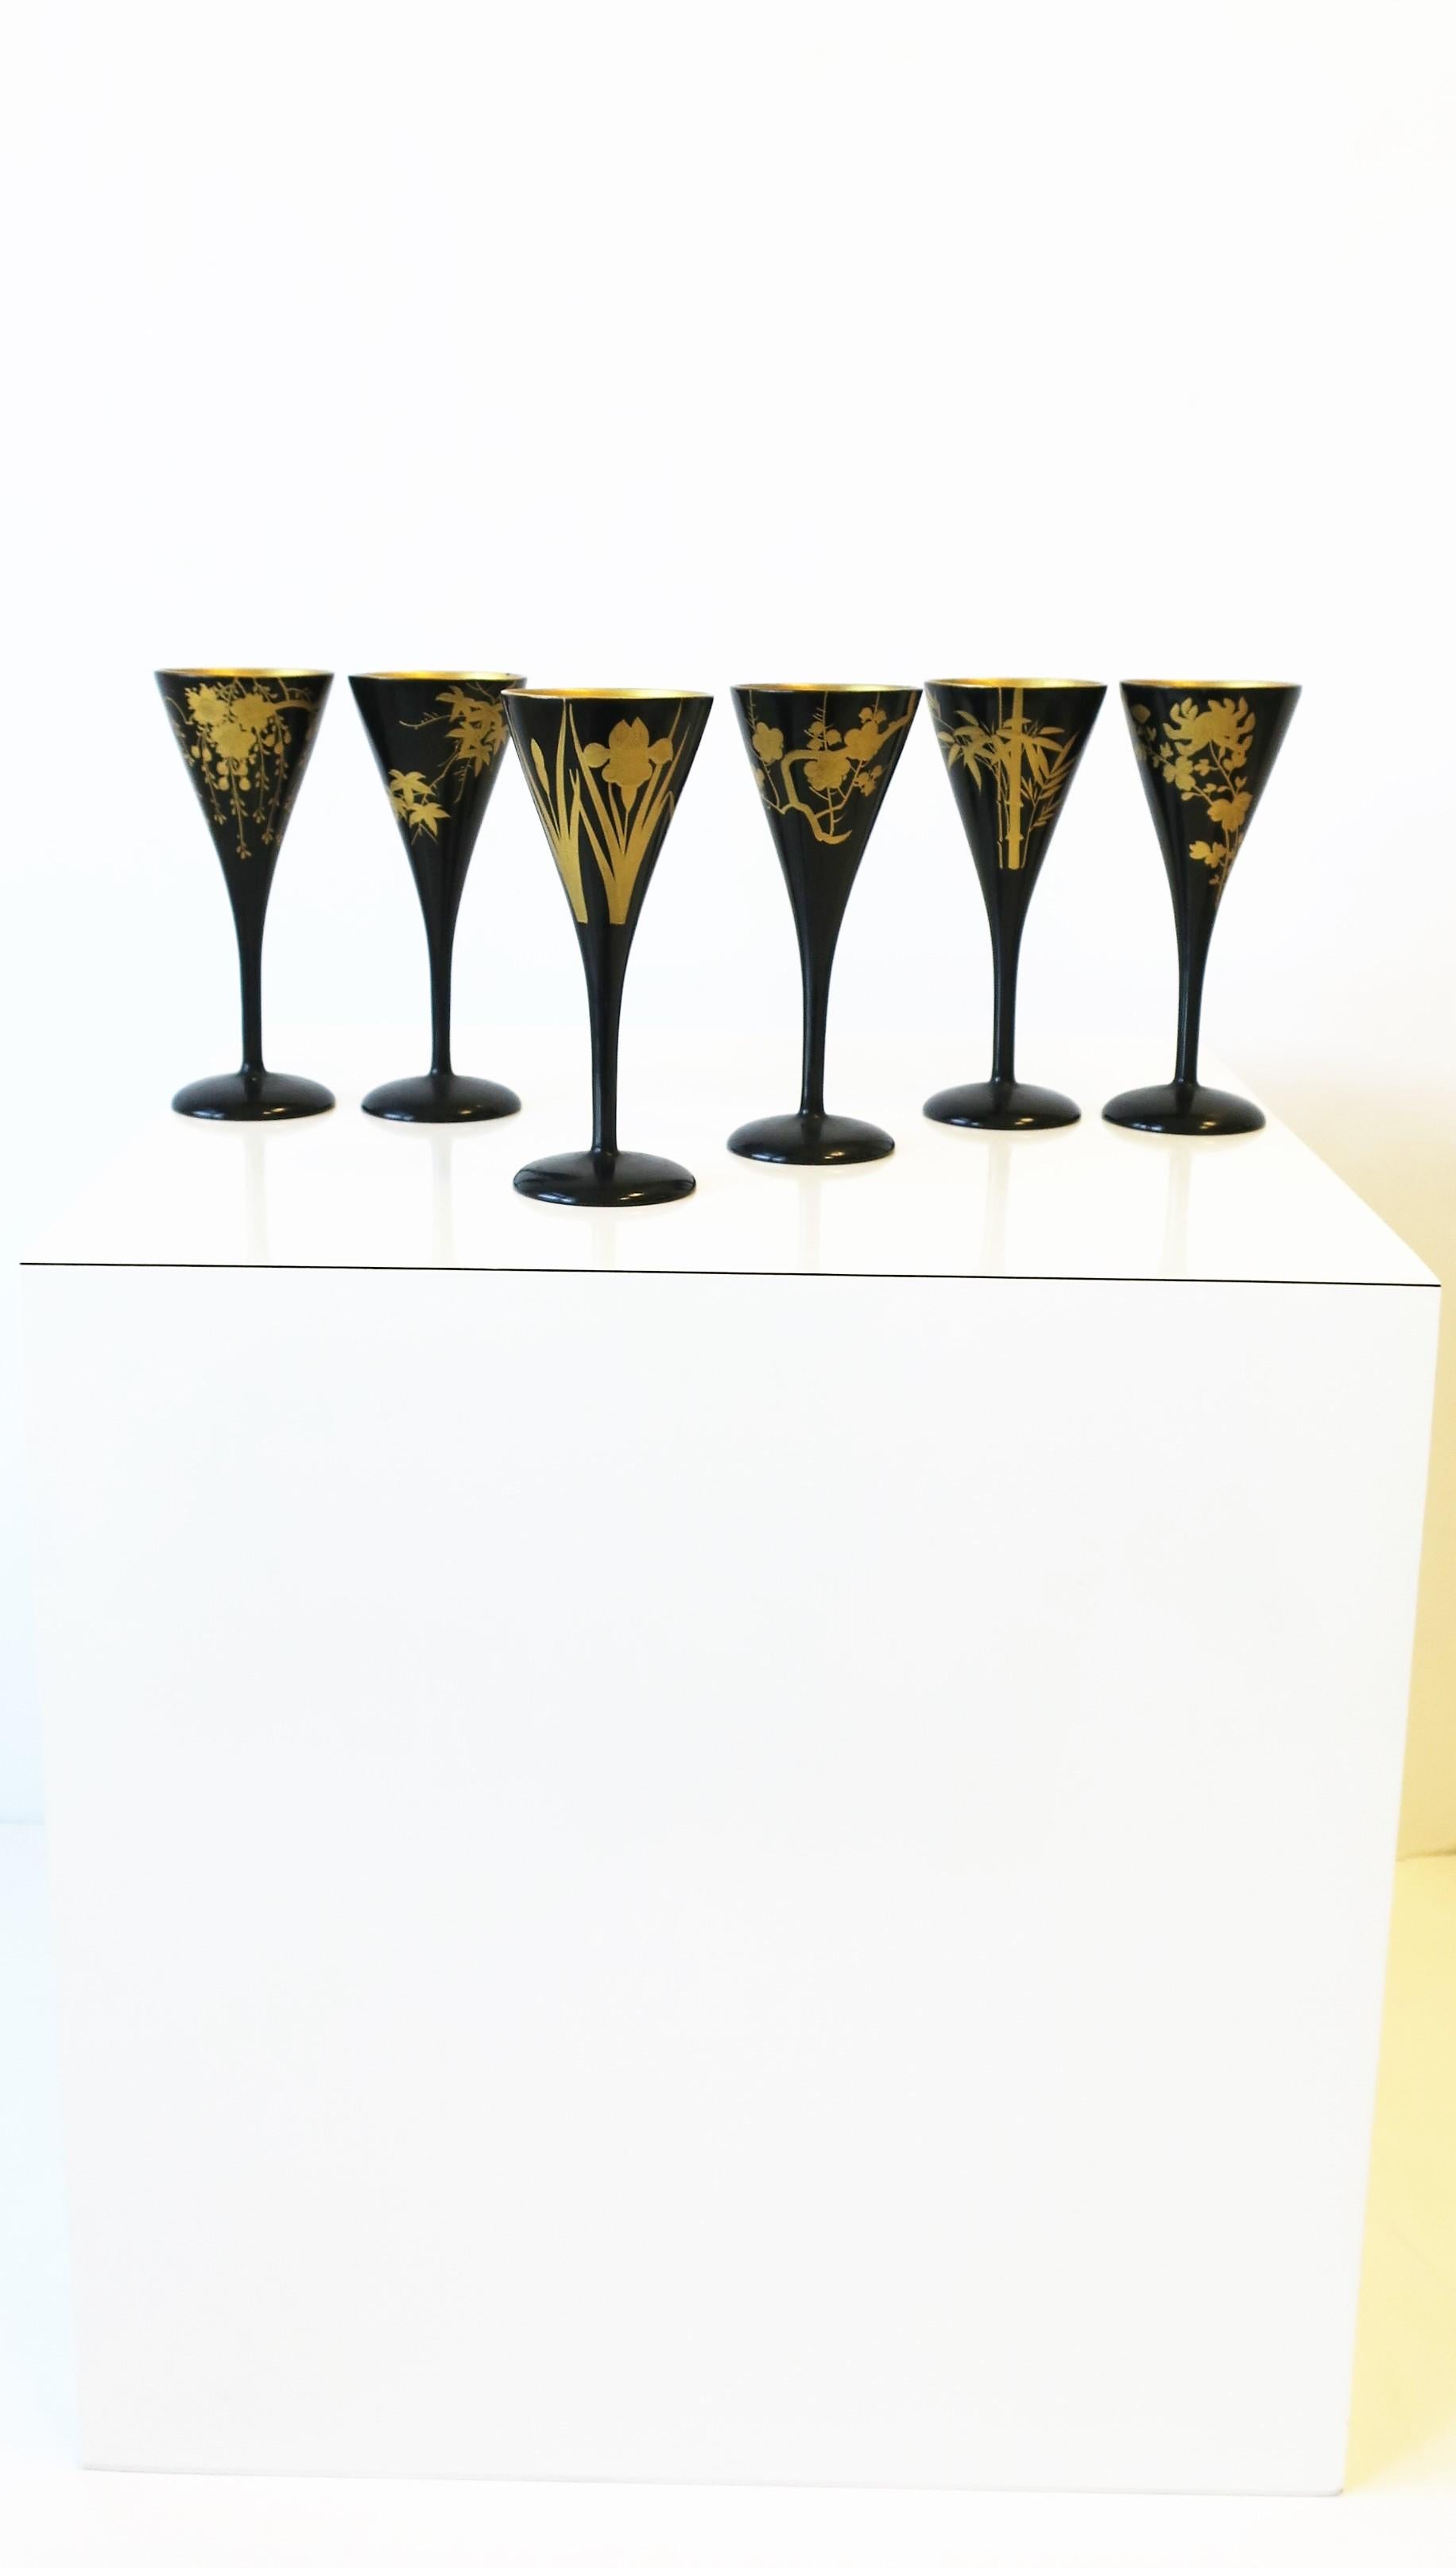 Japanese Black Lacquer & Gold Sake, Champagne Flutes or Wine Stemware, Set of 6 For Sale 2